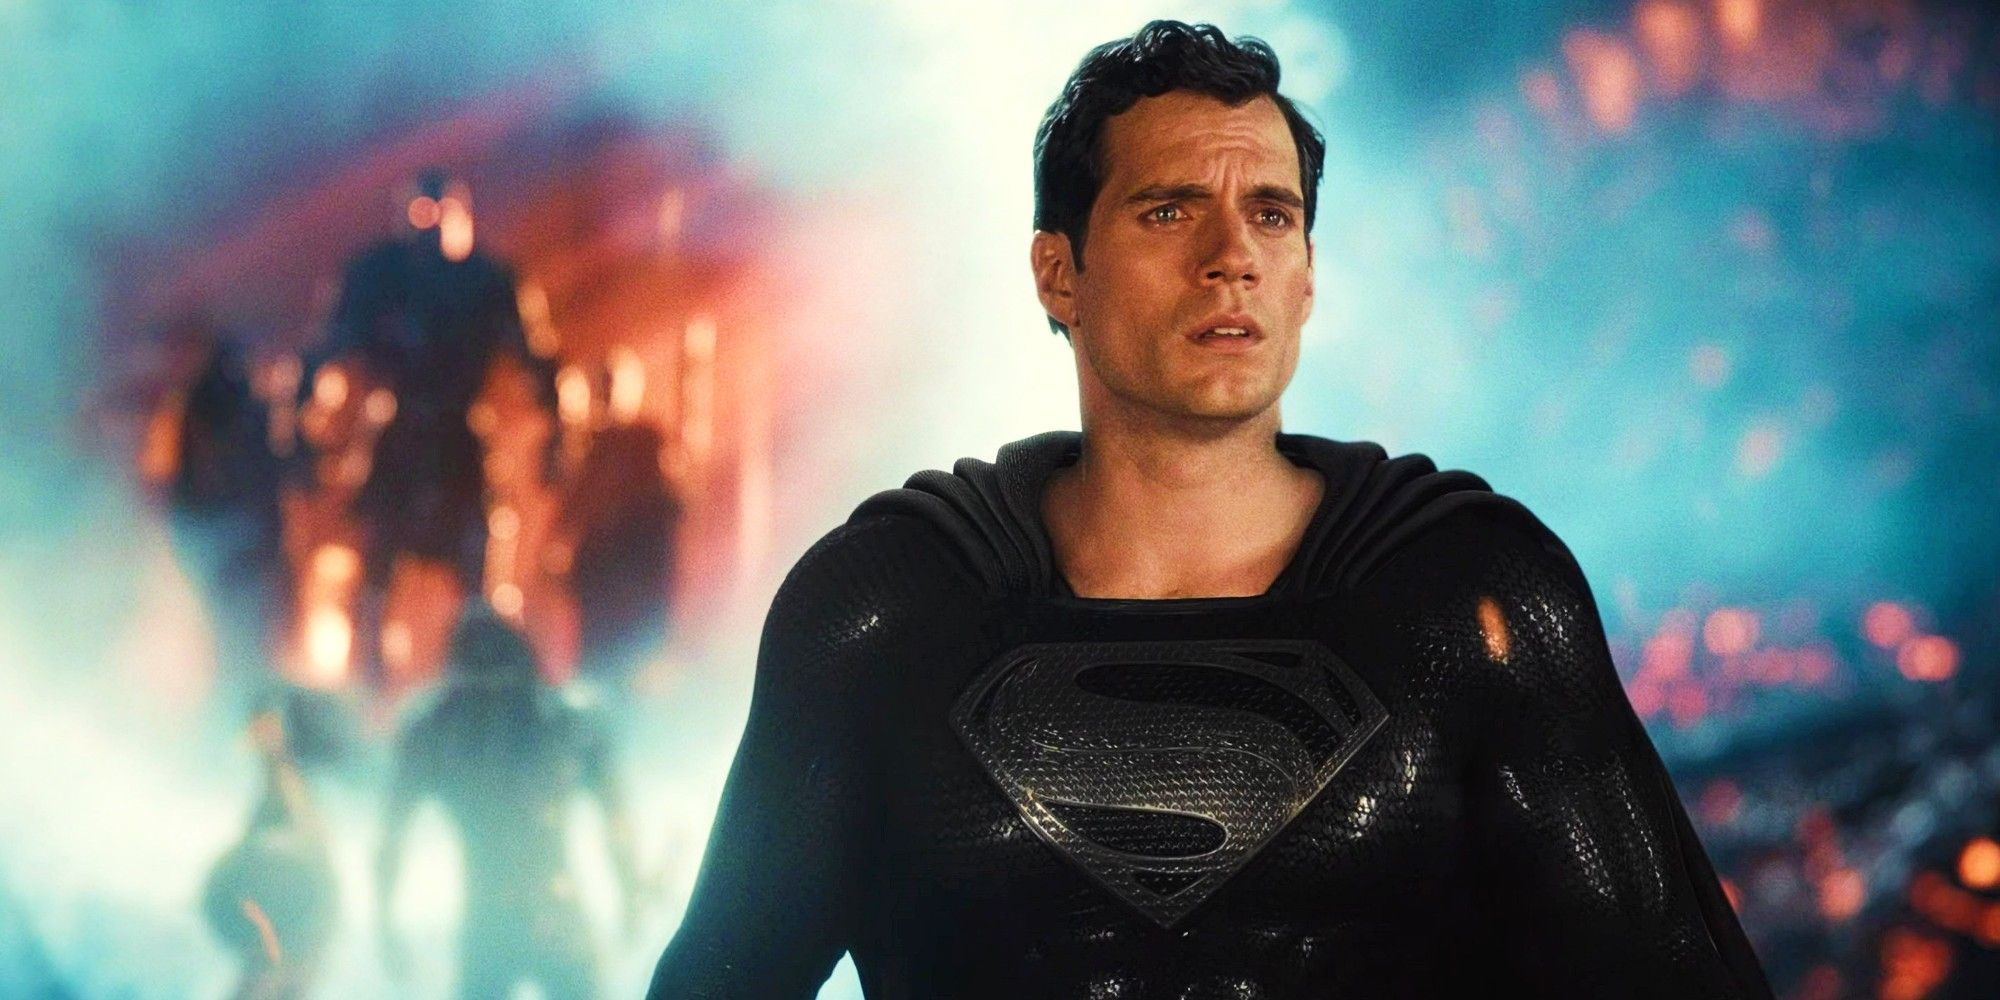 Henry Cavill Breaks Silence on Superman Return With Heartfelt Announcement